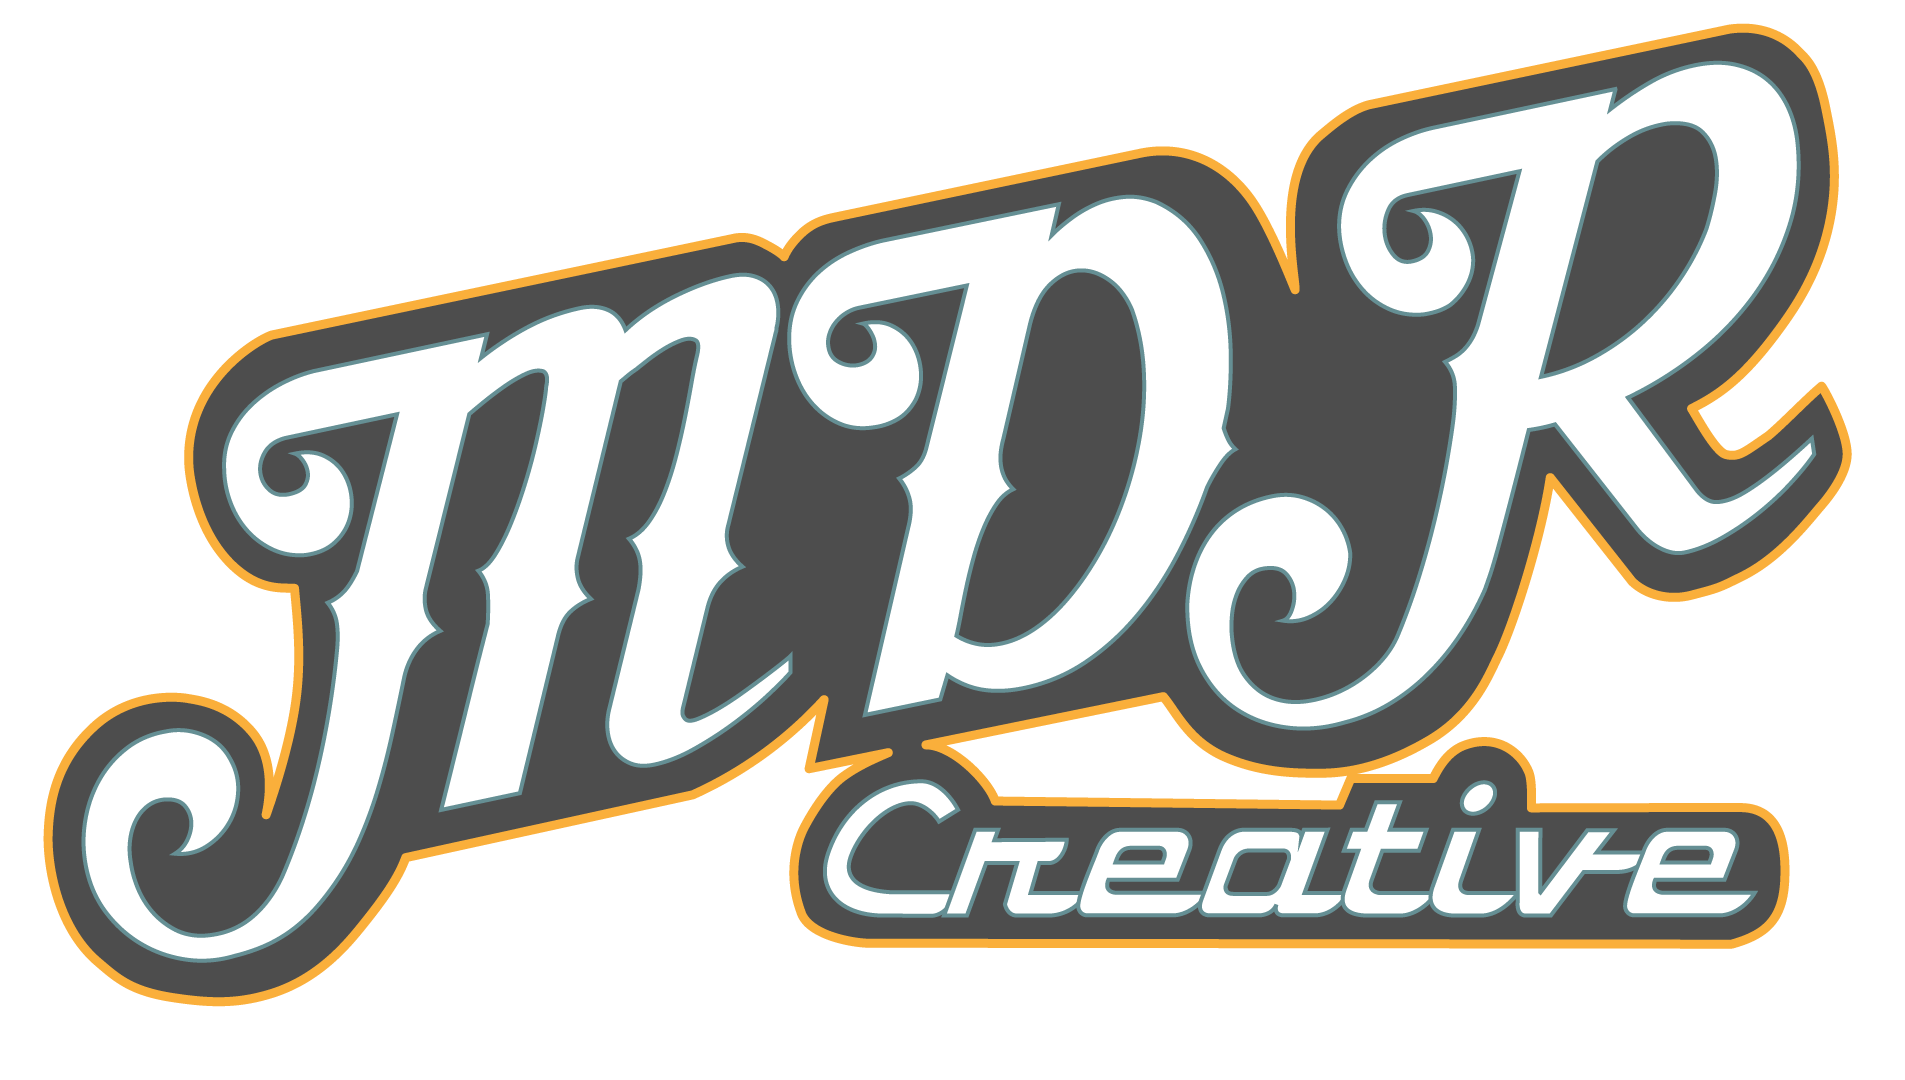 MDR Creative